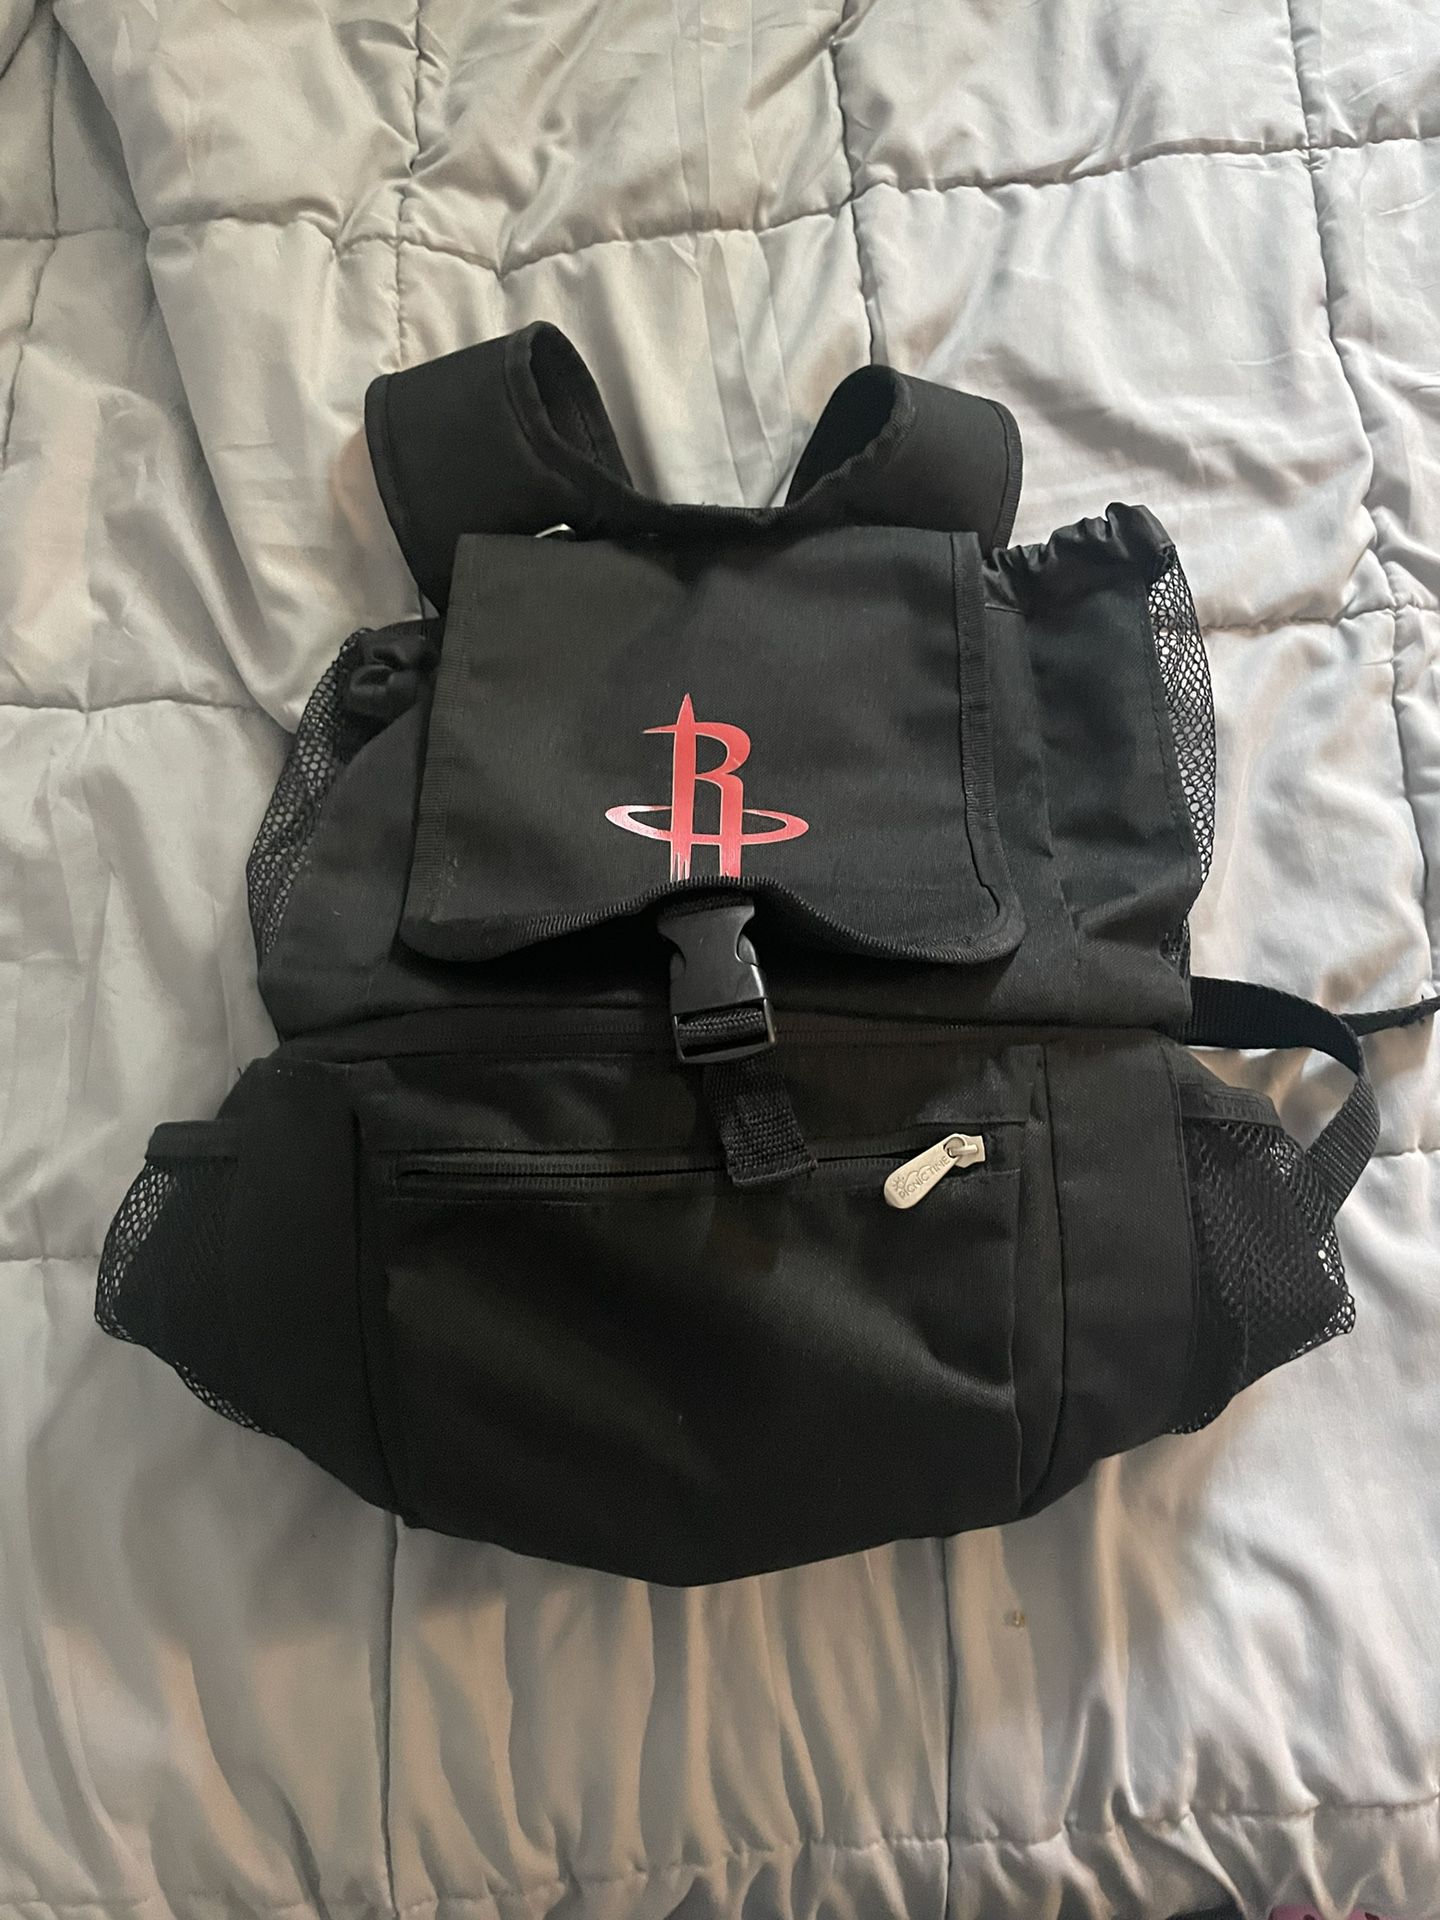 Rockets Backpack